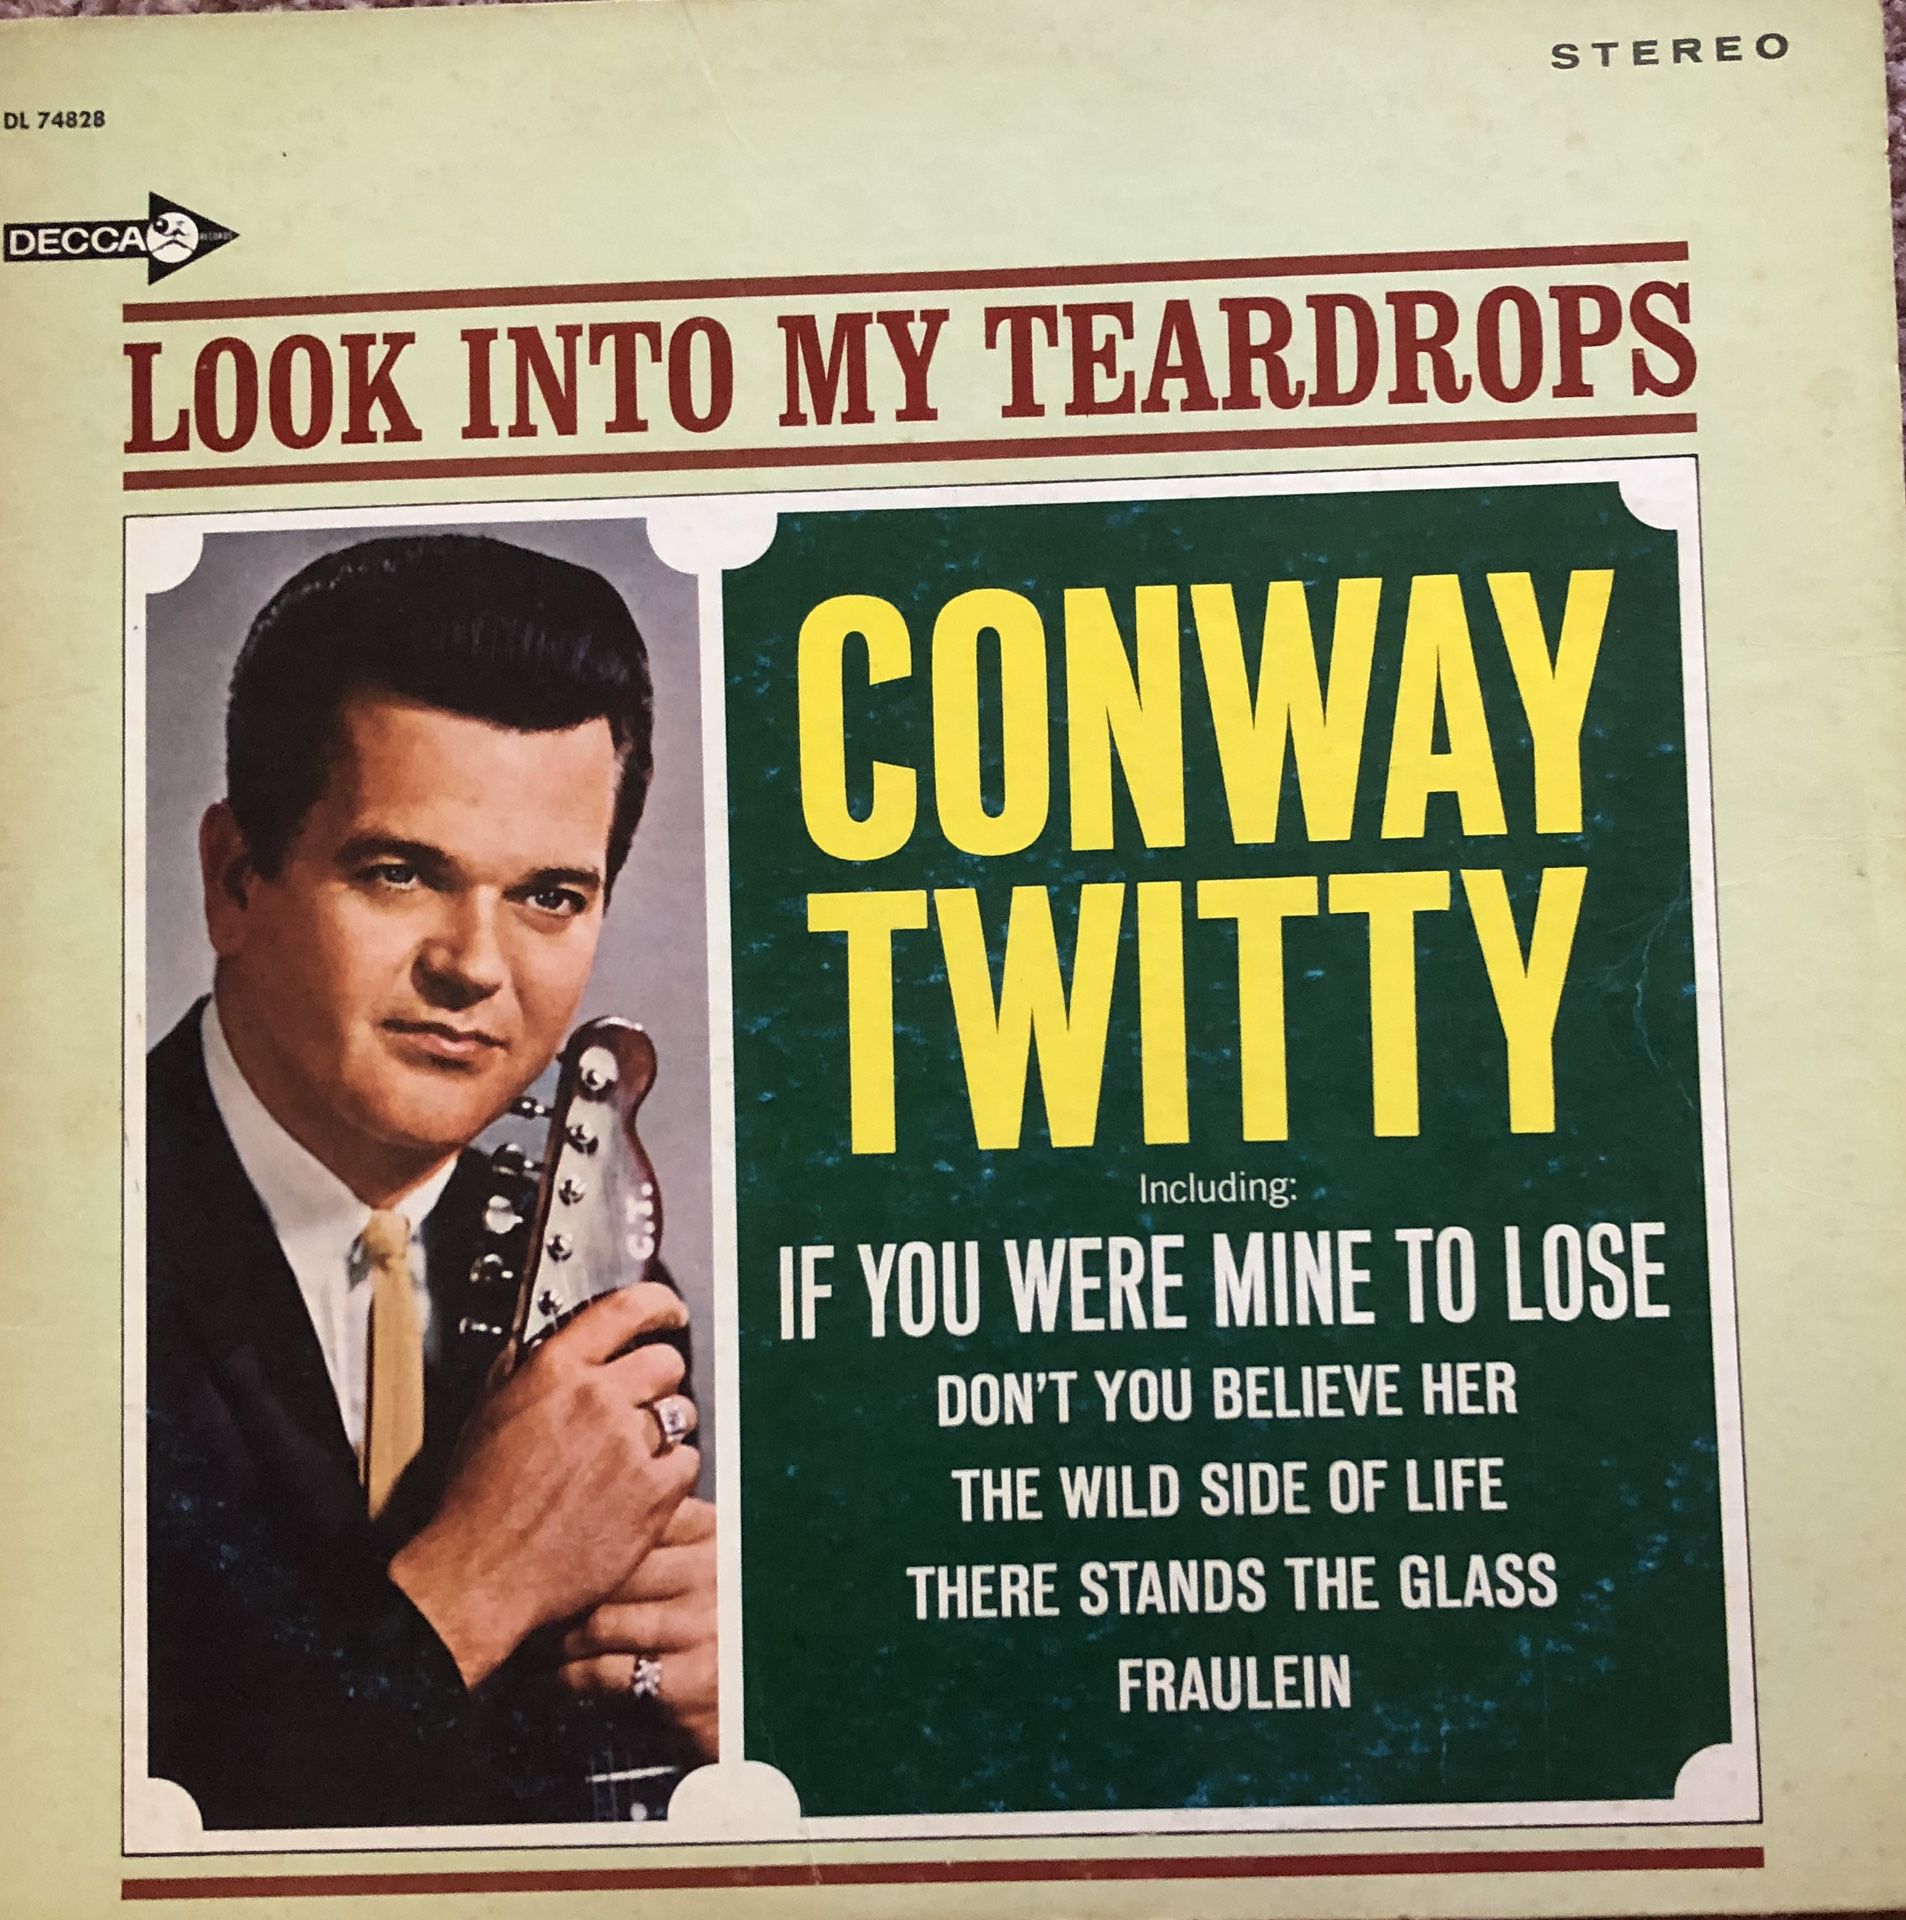 Conway Twitty “Look Into My Teardrops” Vinyl Album $9